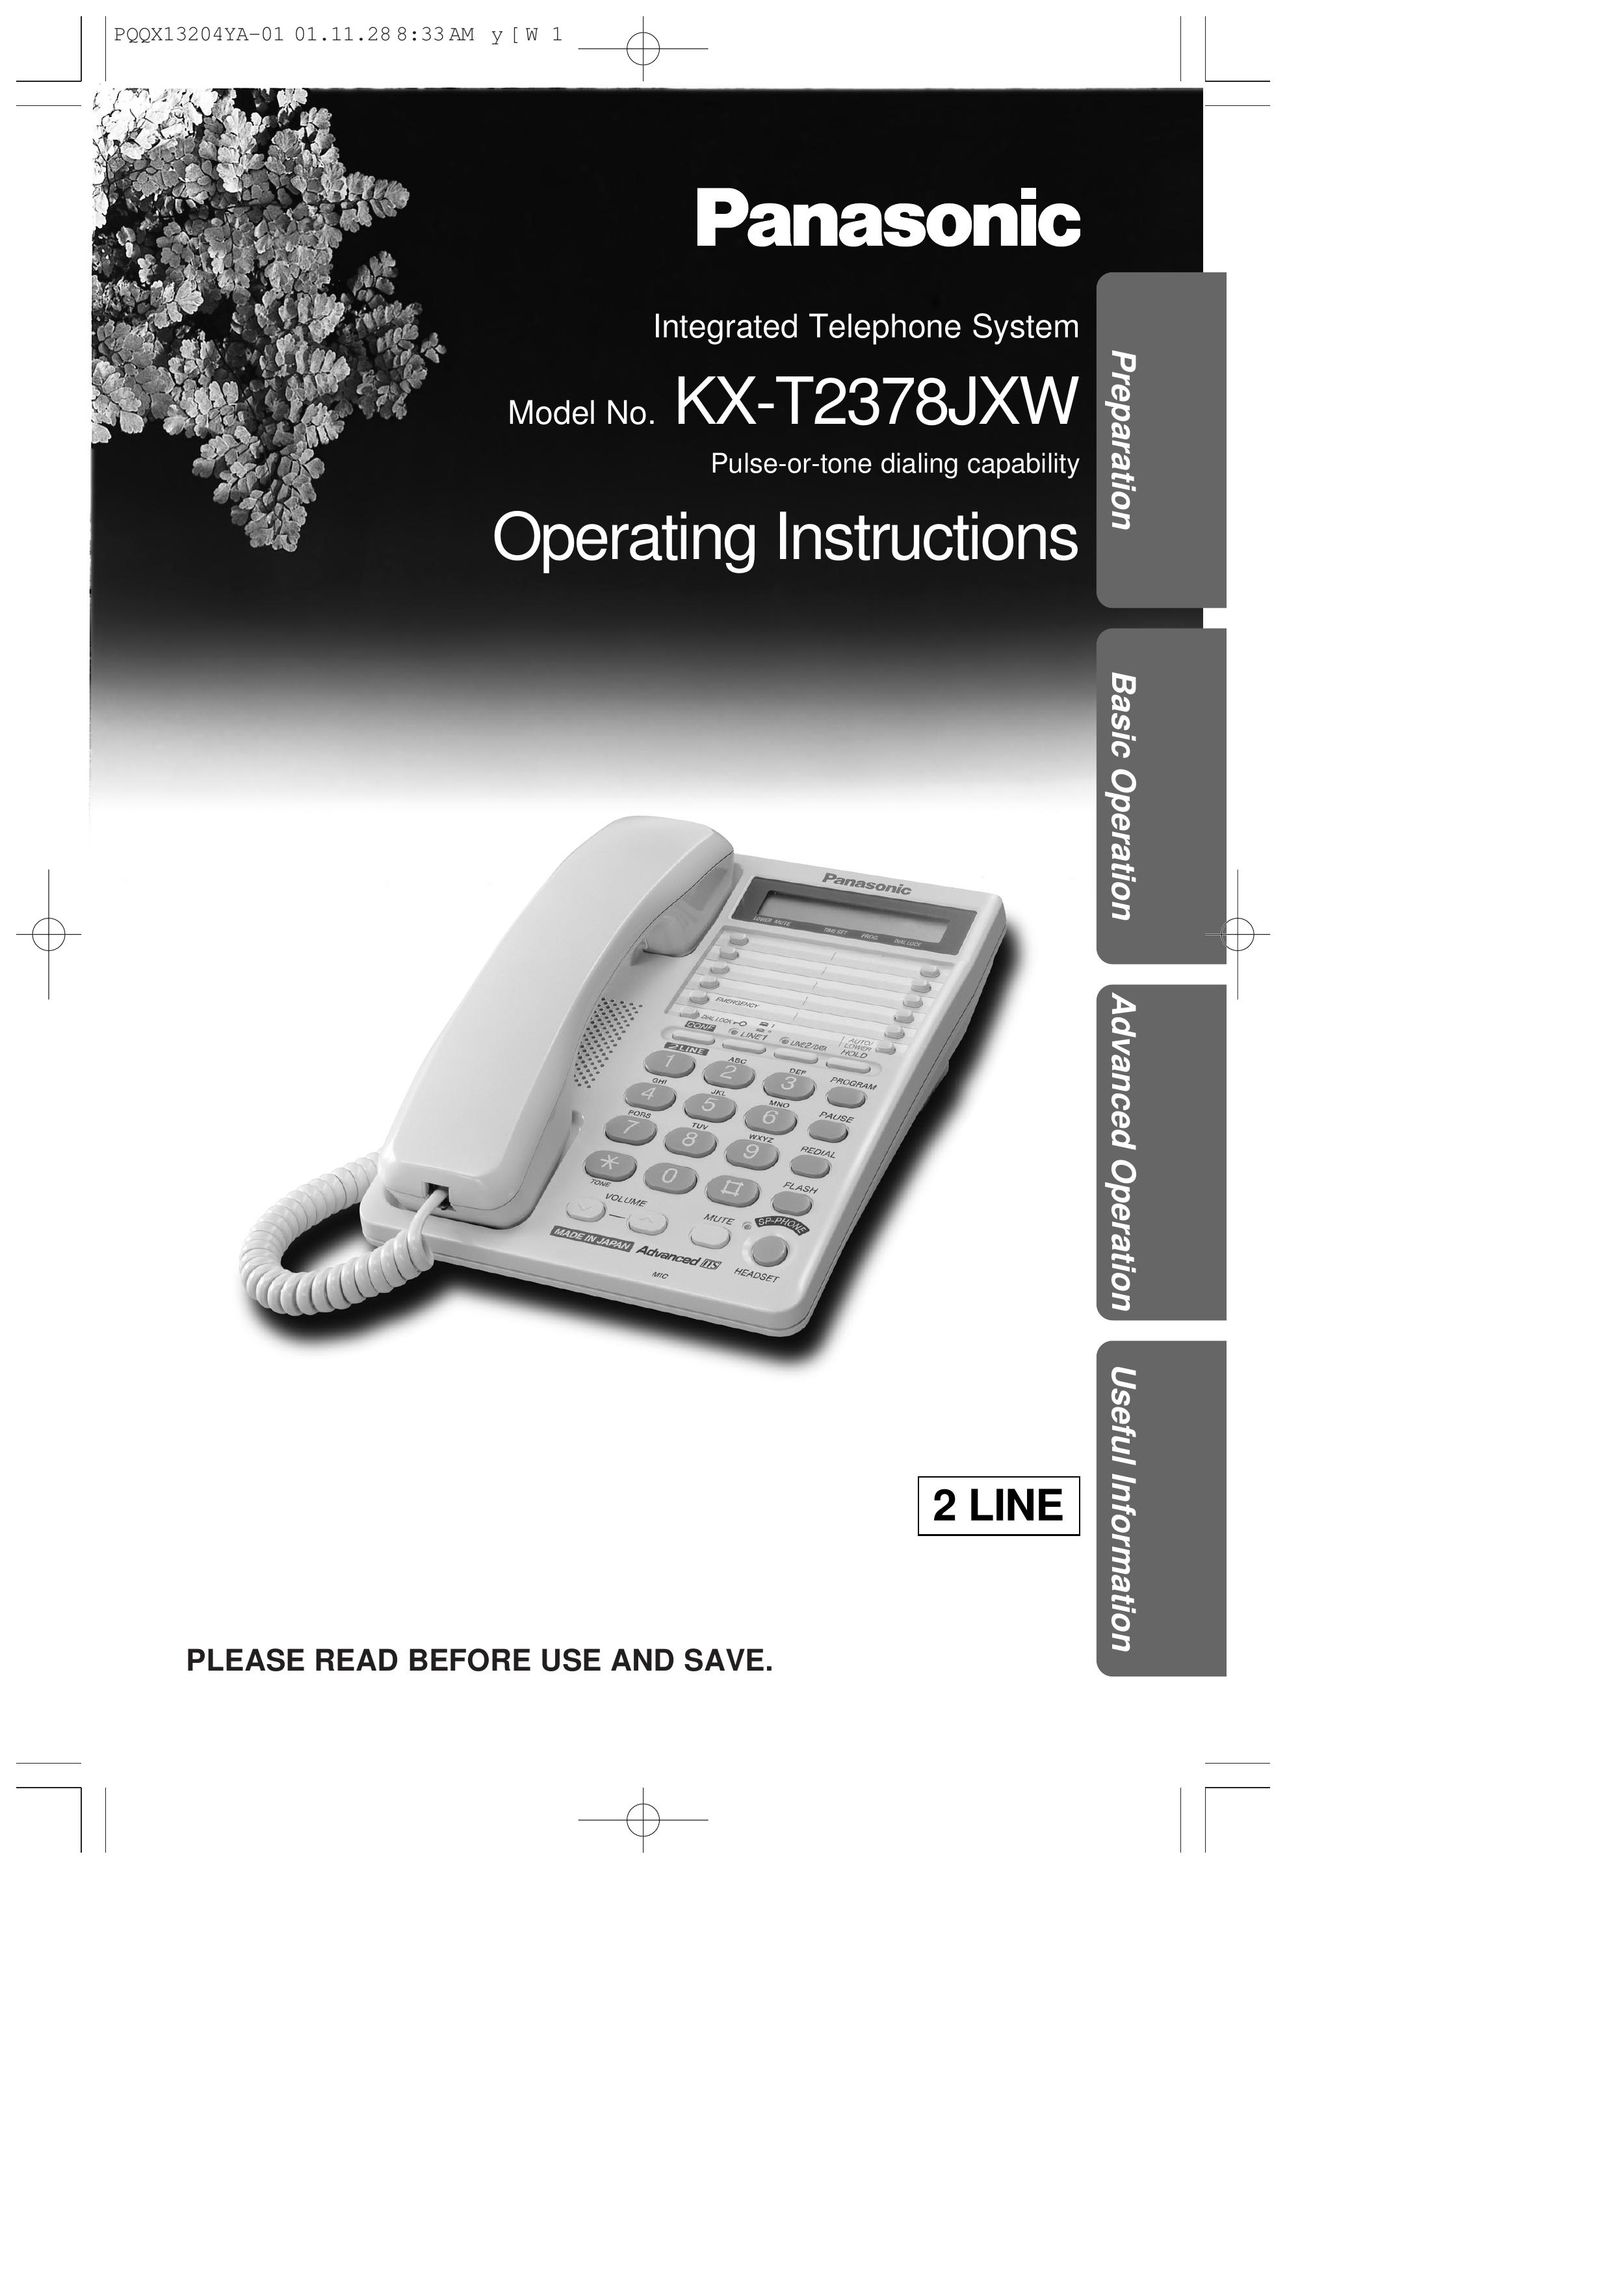 Panasonic KX-T2378JXW Answering Machine User Manual